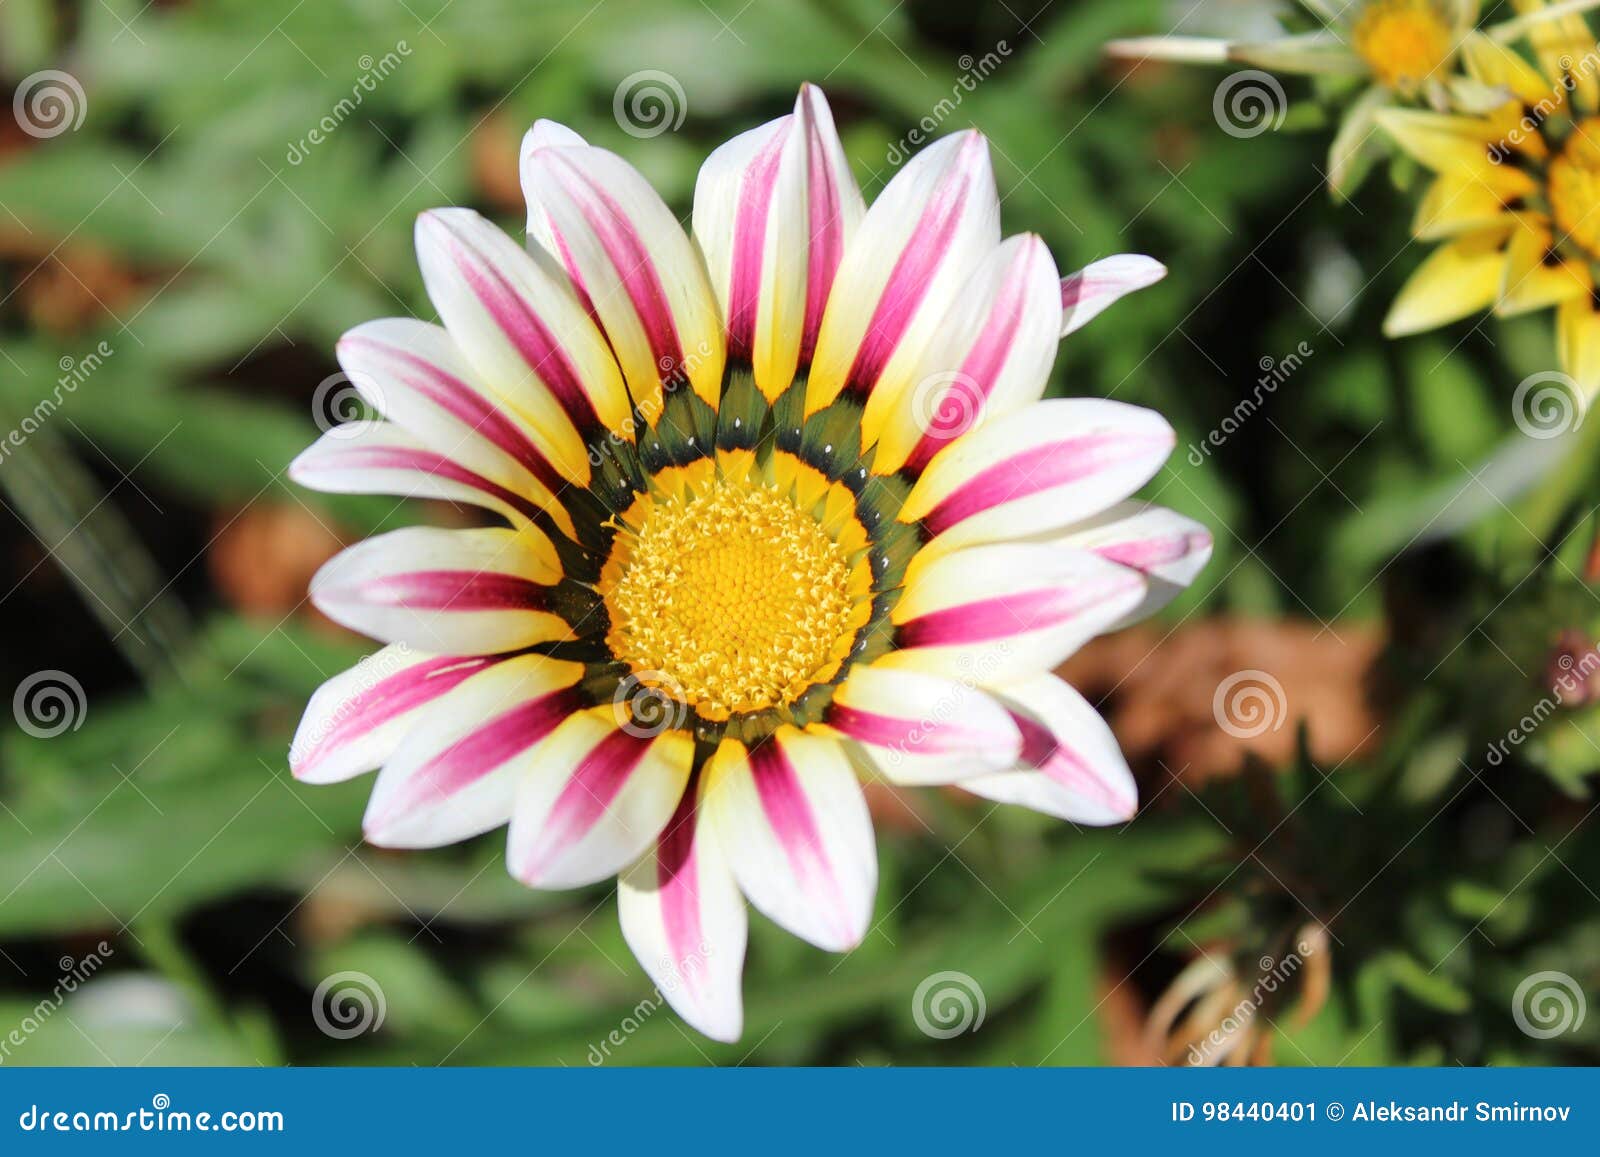 Beautiful Gazania Flower In A Blooming Garden Stock Image Image Of Macro Flower 98440401